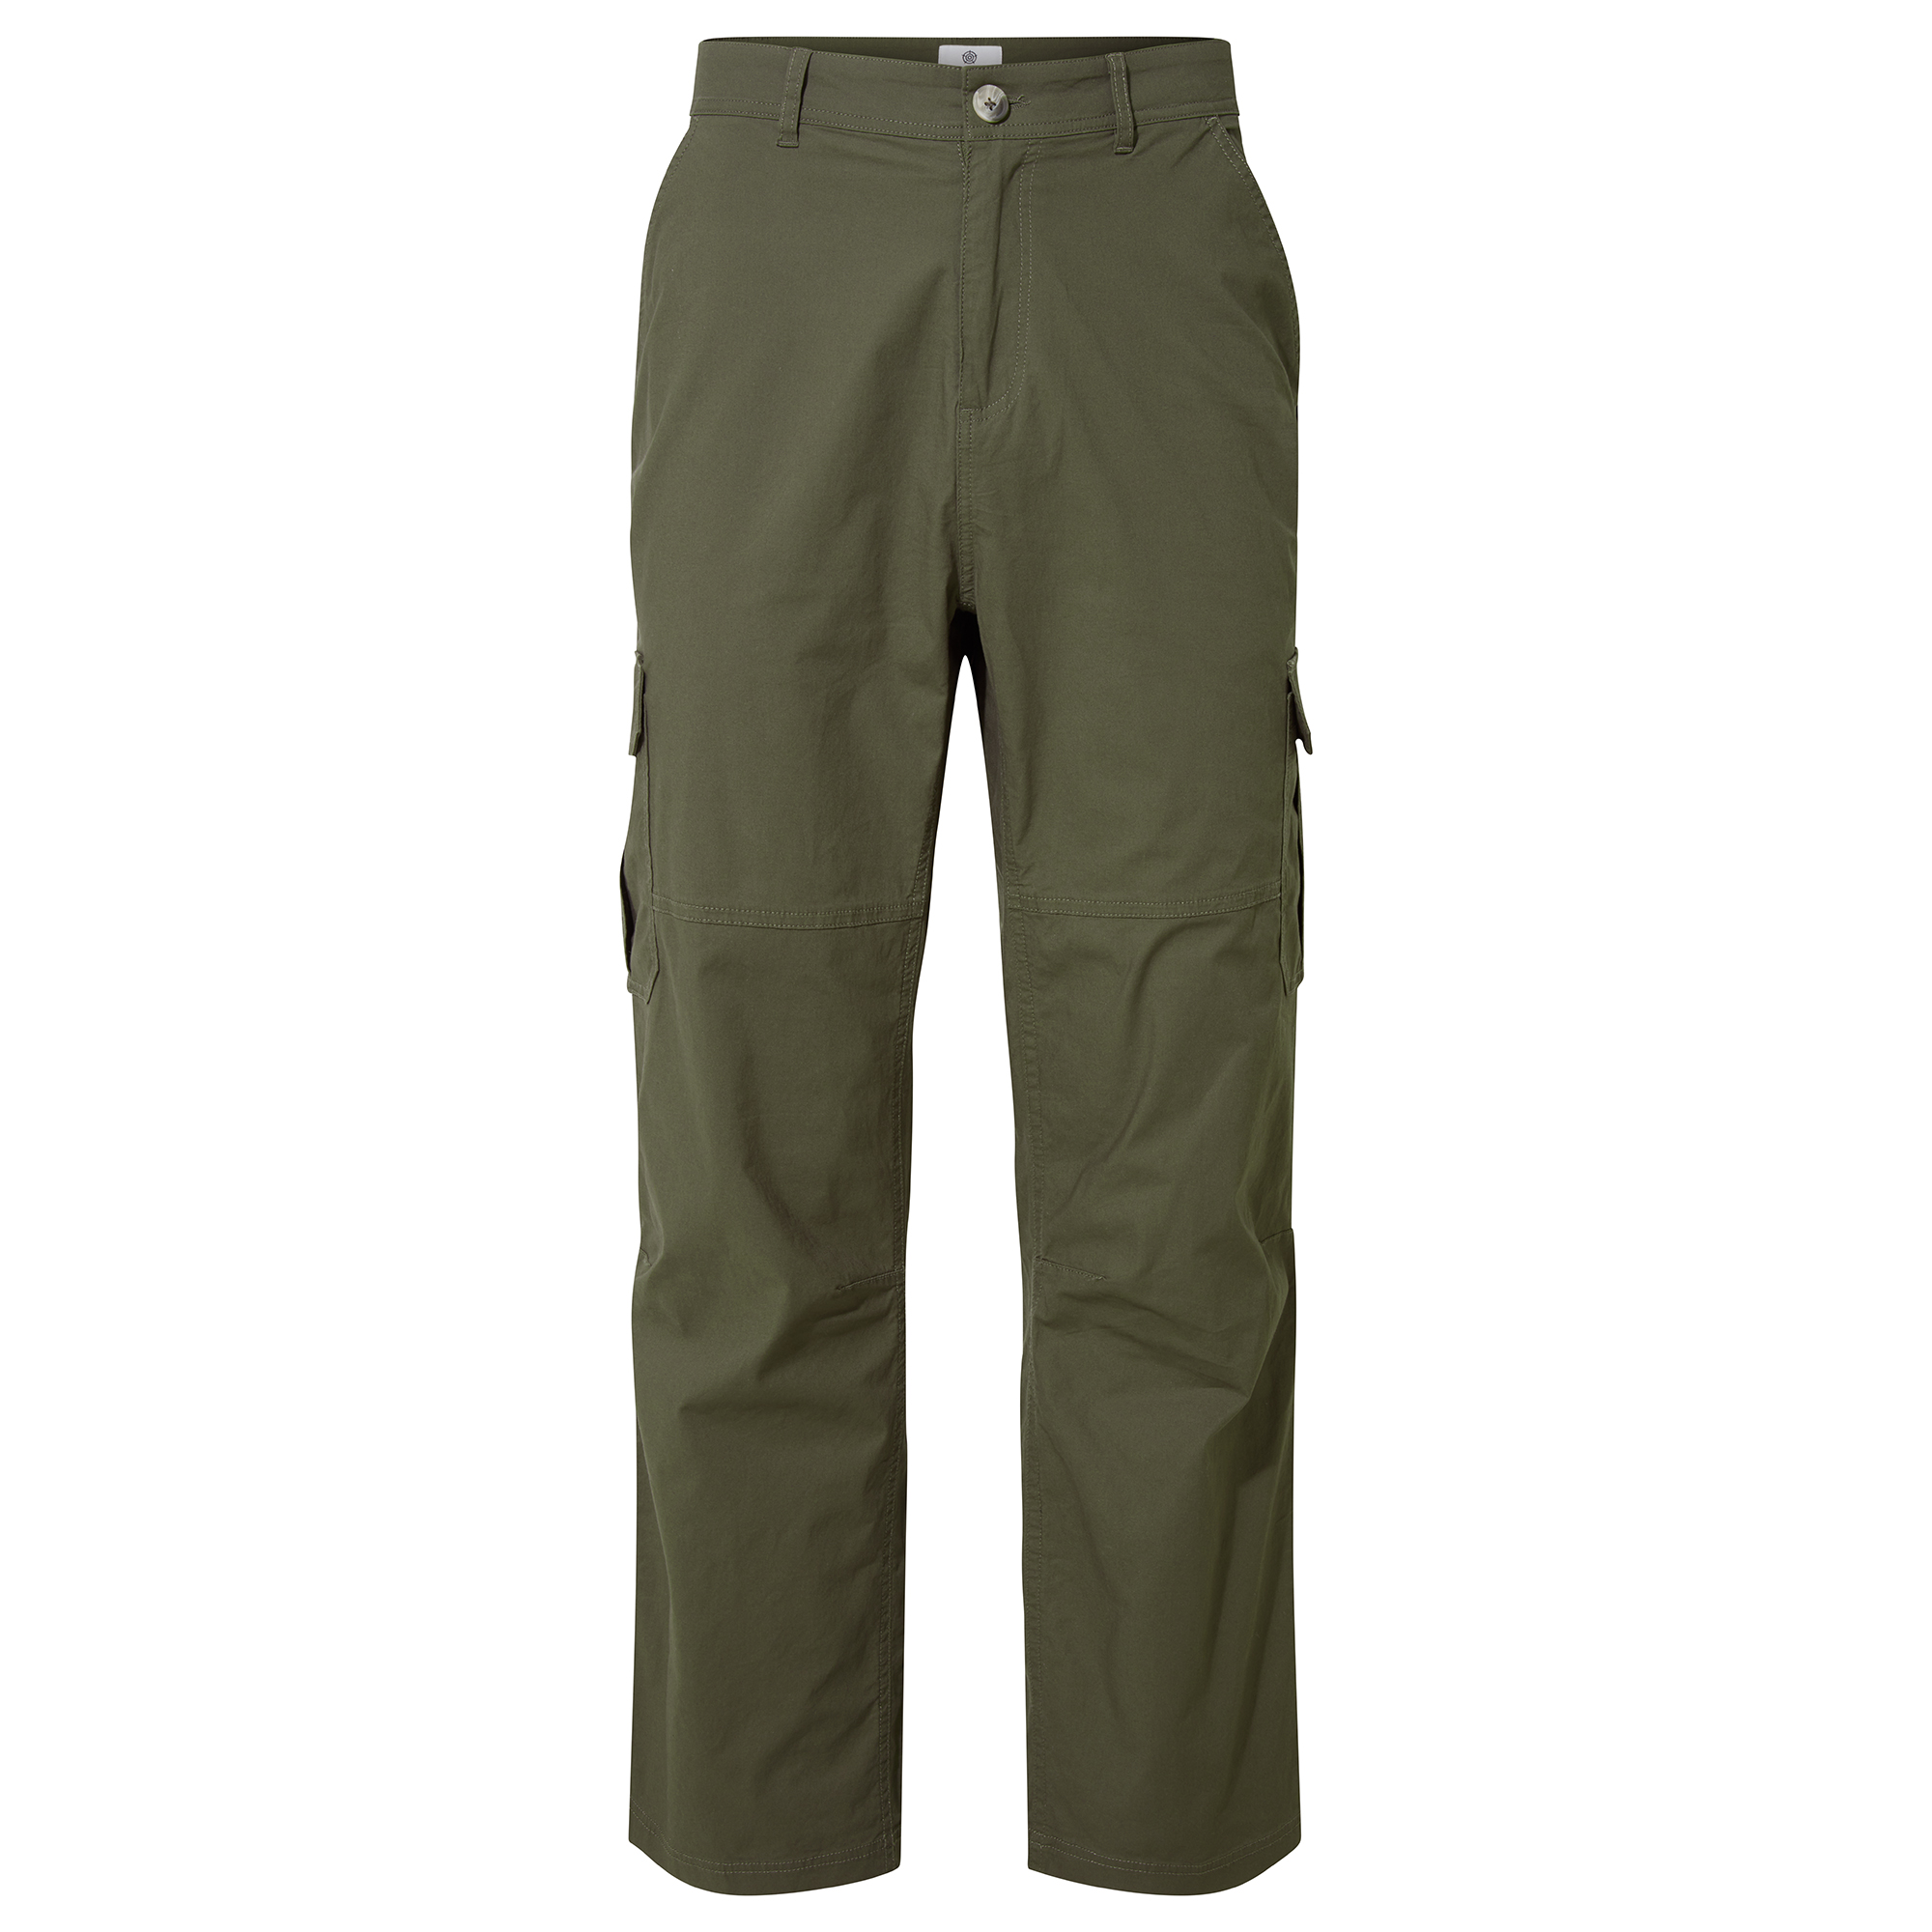 TOG24 Dibden Men's Cargo Pants, Lightweight, Supersoft Cotton,Walking ...